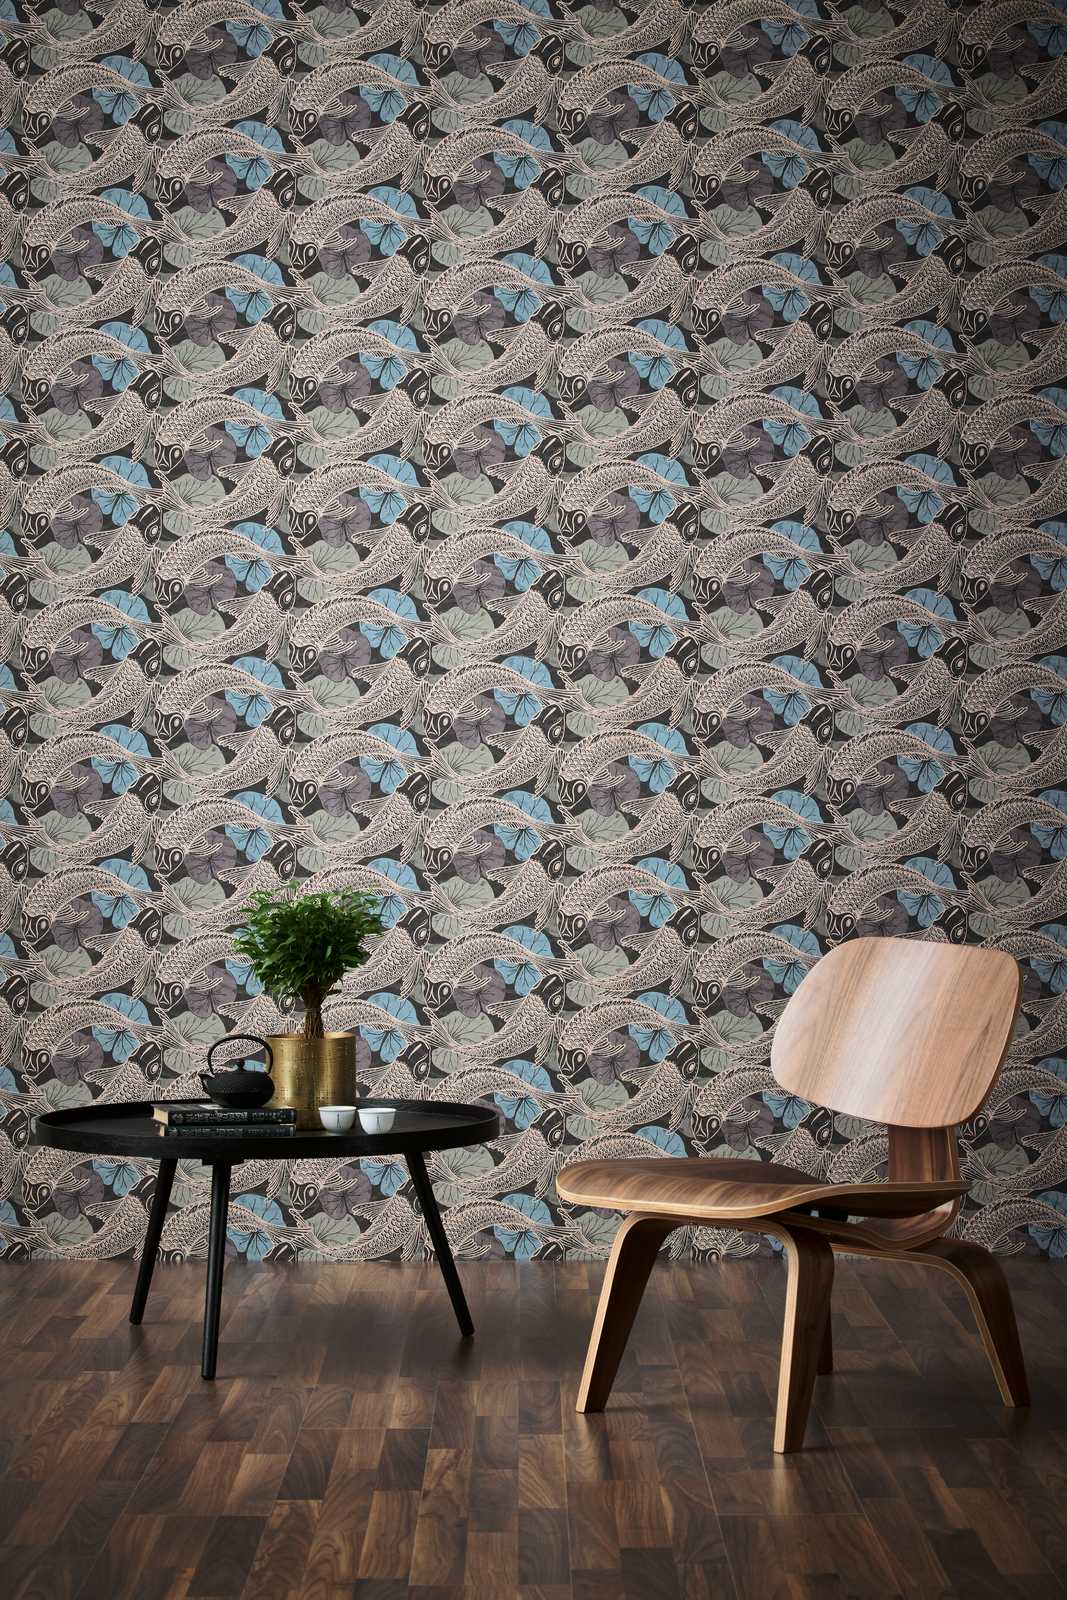             Non-woven wallpaper Asian Koi design with metallic effect - blue, metallic, black
        